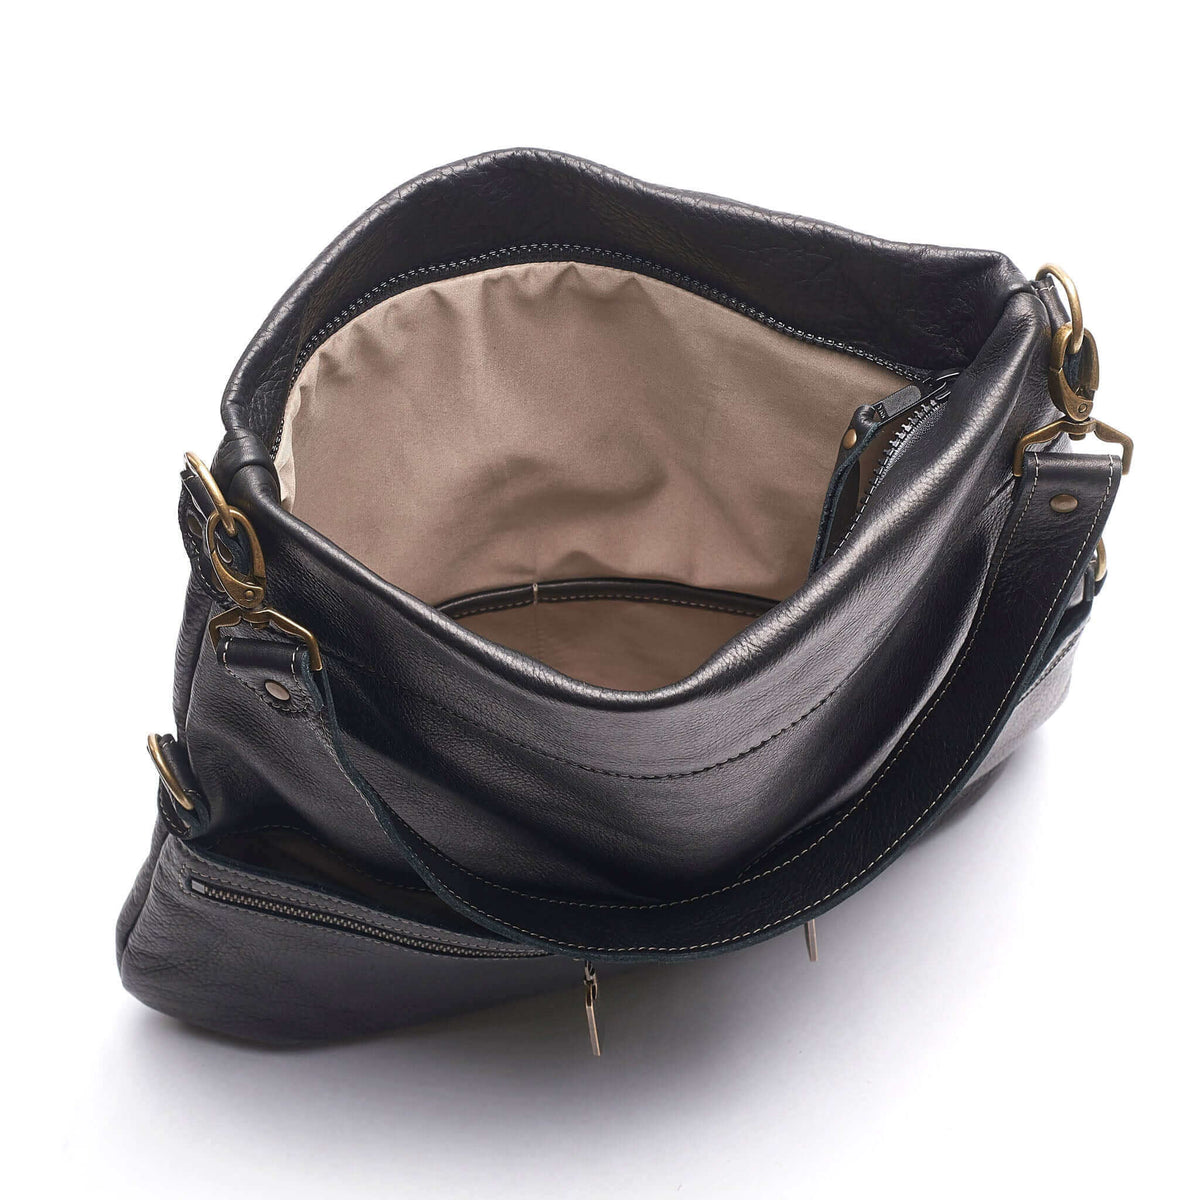 6-in-1 leather crossbody backpack - Brynn Capella, USA by Brynn Capella - Made in USA $498 - Large Crossbody